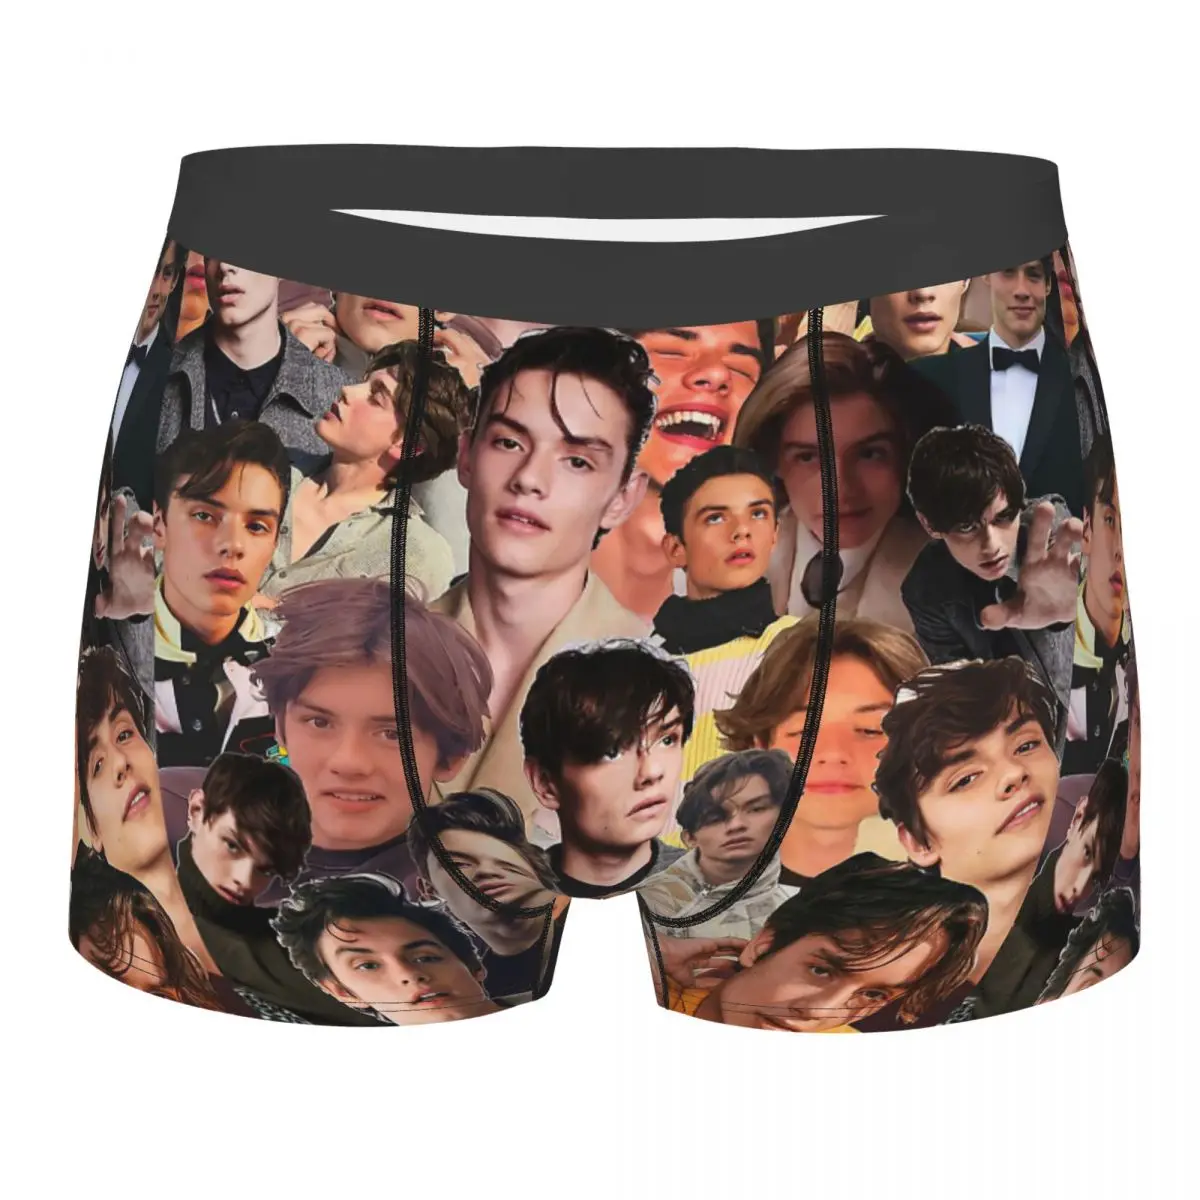 

Man Louis Partridge Collage Underwear Star Actor Movie Fashion Boxer Shorts Panties Homme Soft Underpants Plus Size